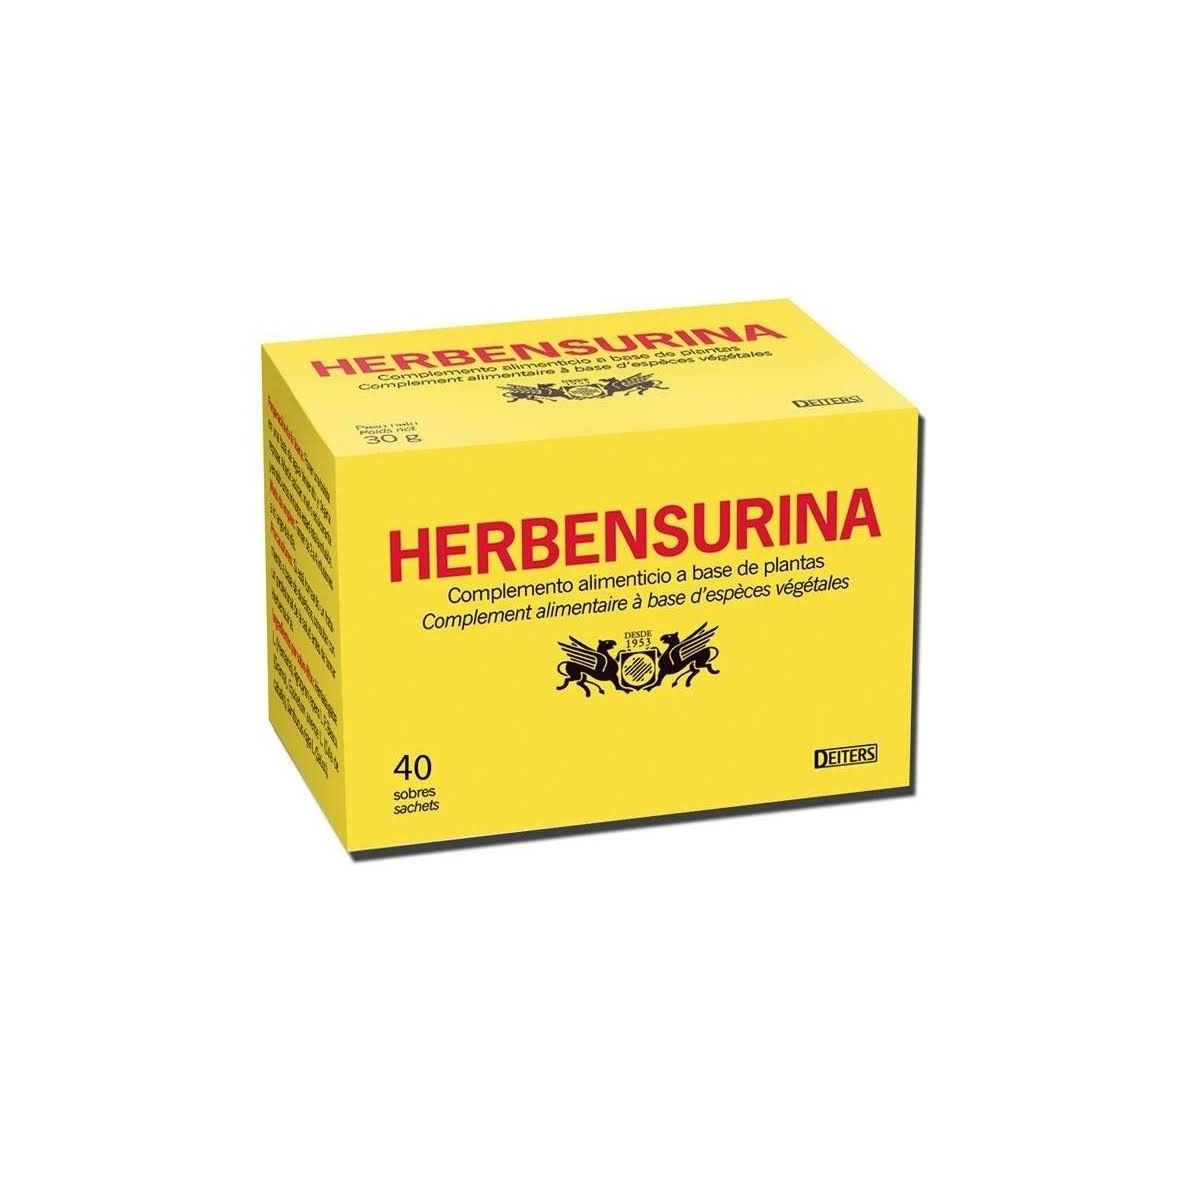 Herbensurina - 40 sobres